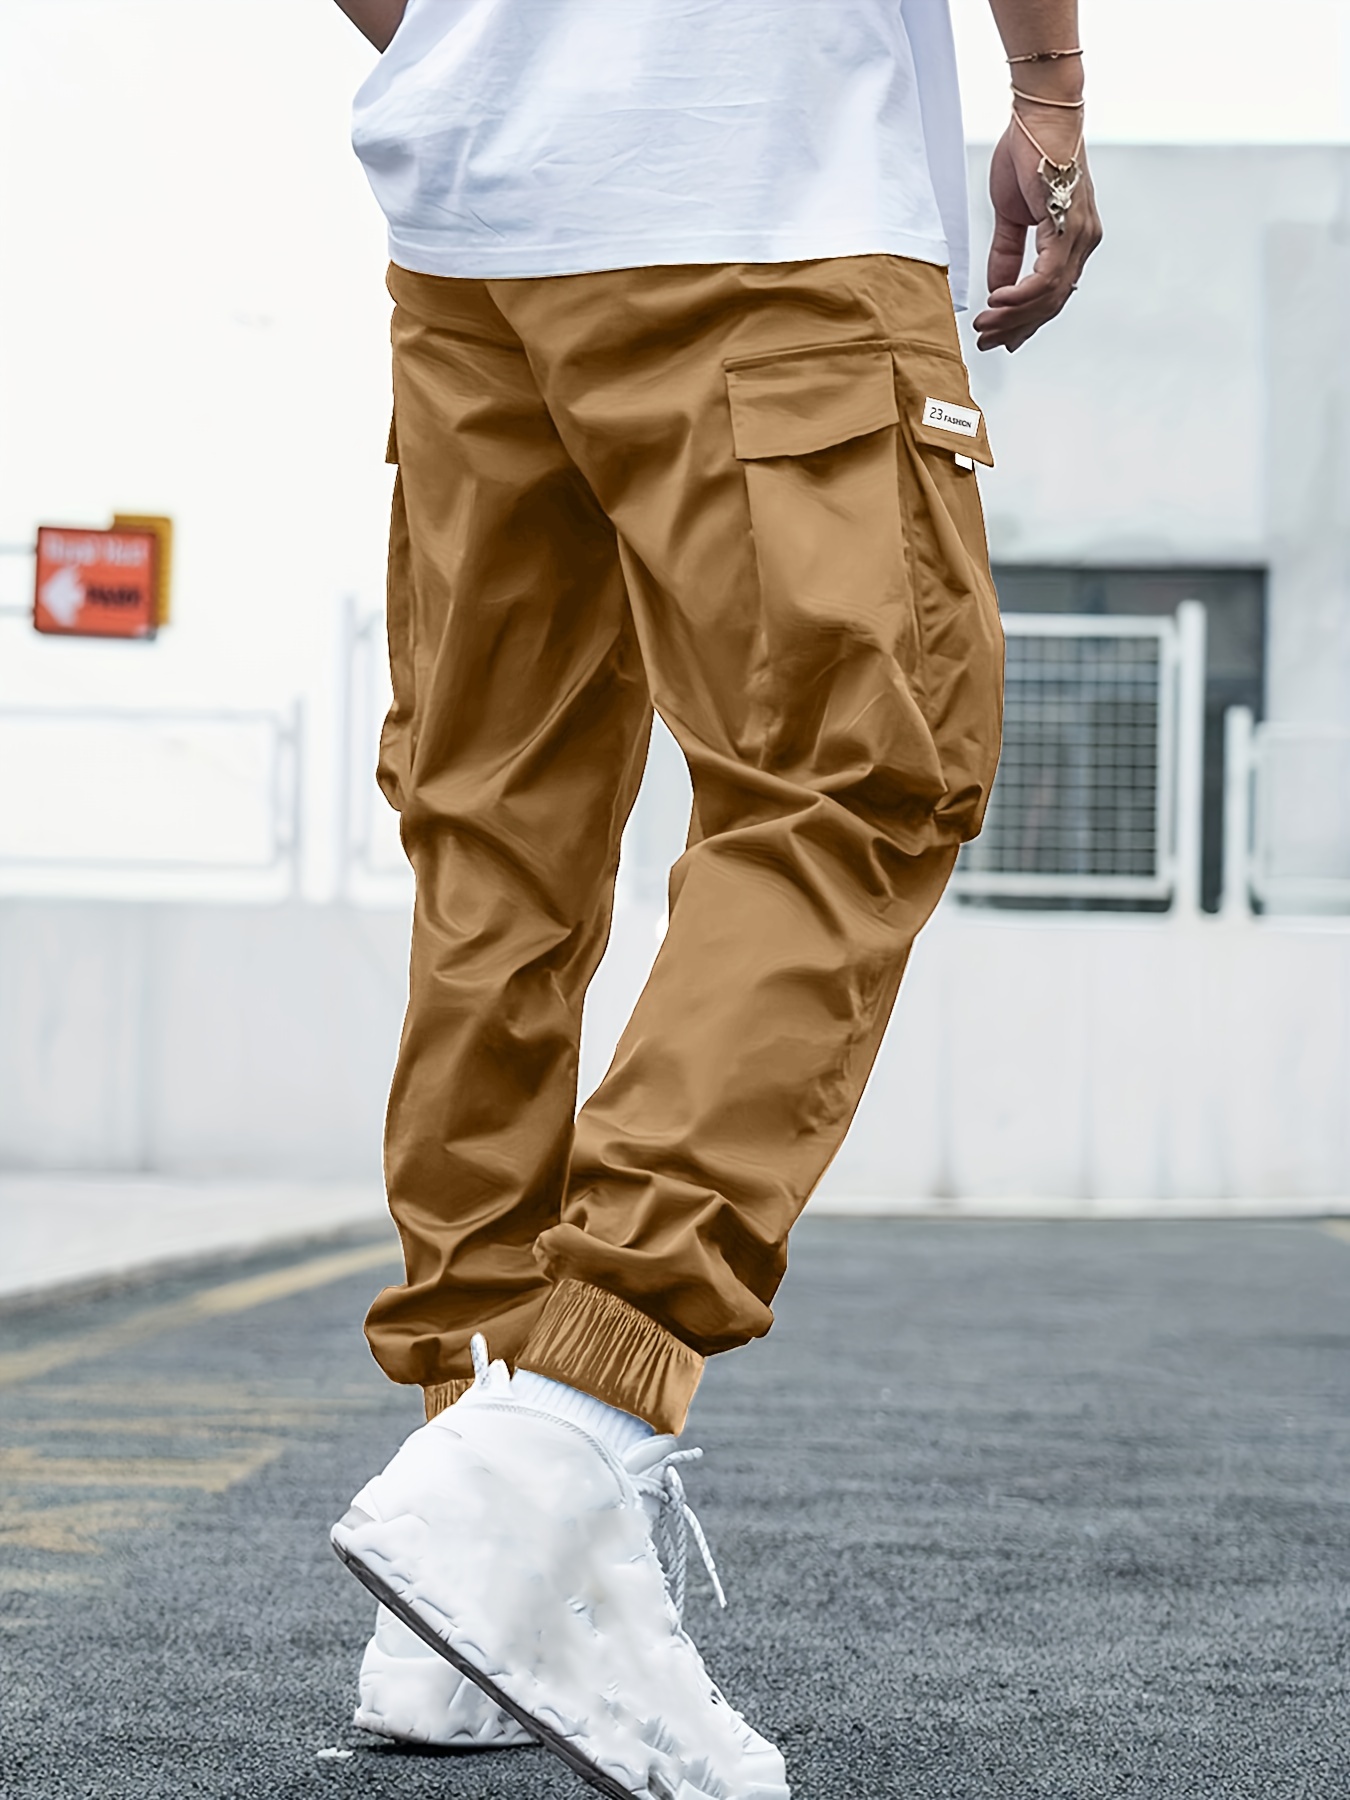 53 Best Cargo Pants Outfit Ideas